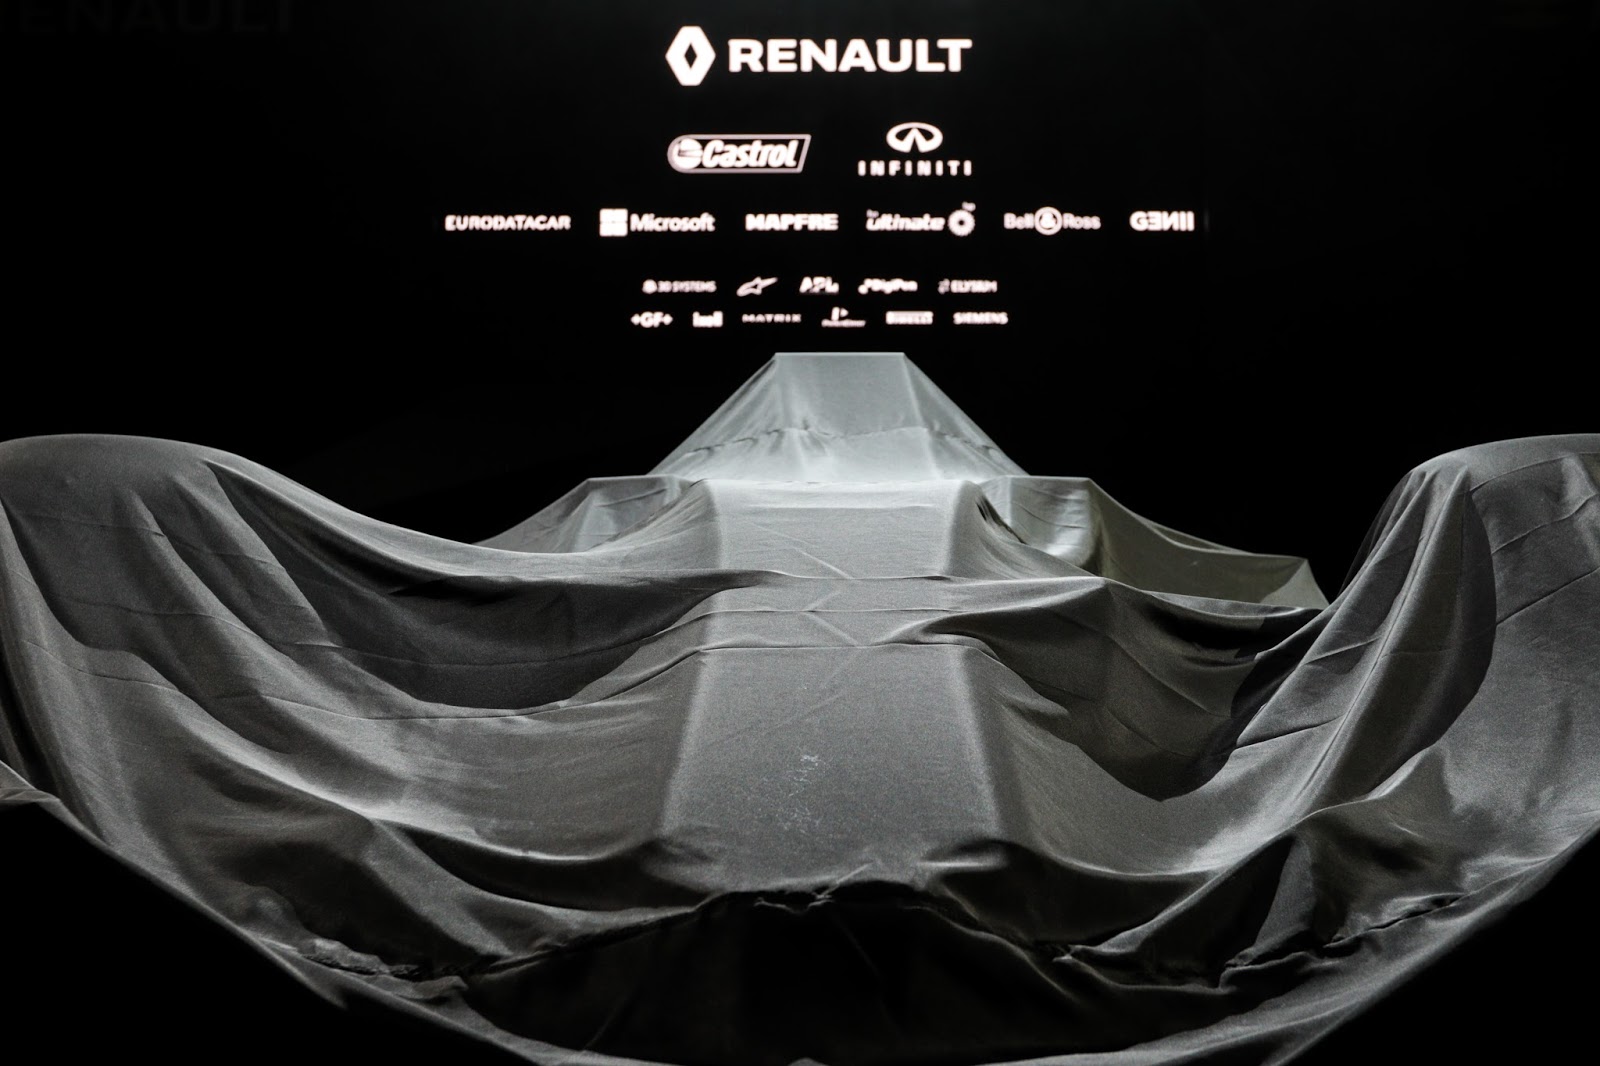 210217 RL 001 1 Η Renault Sport παρουσίασε το καινούργιο της μονοθέσιο, την R.S.17